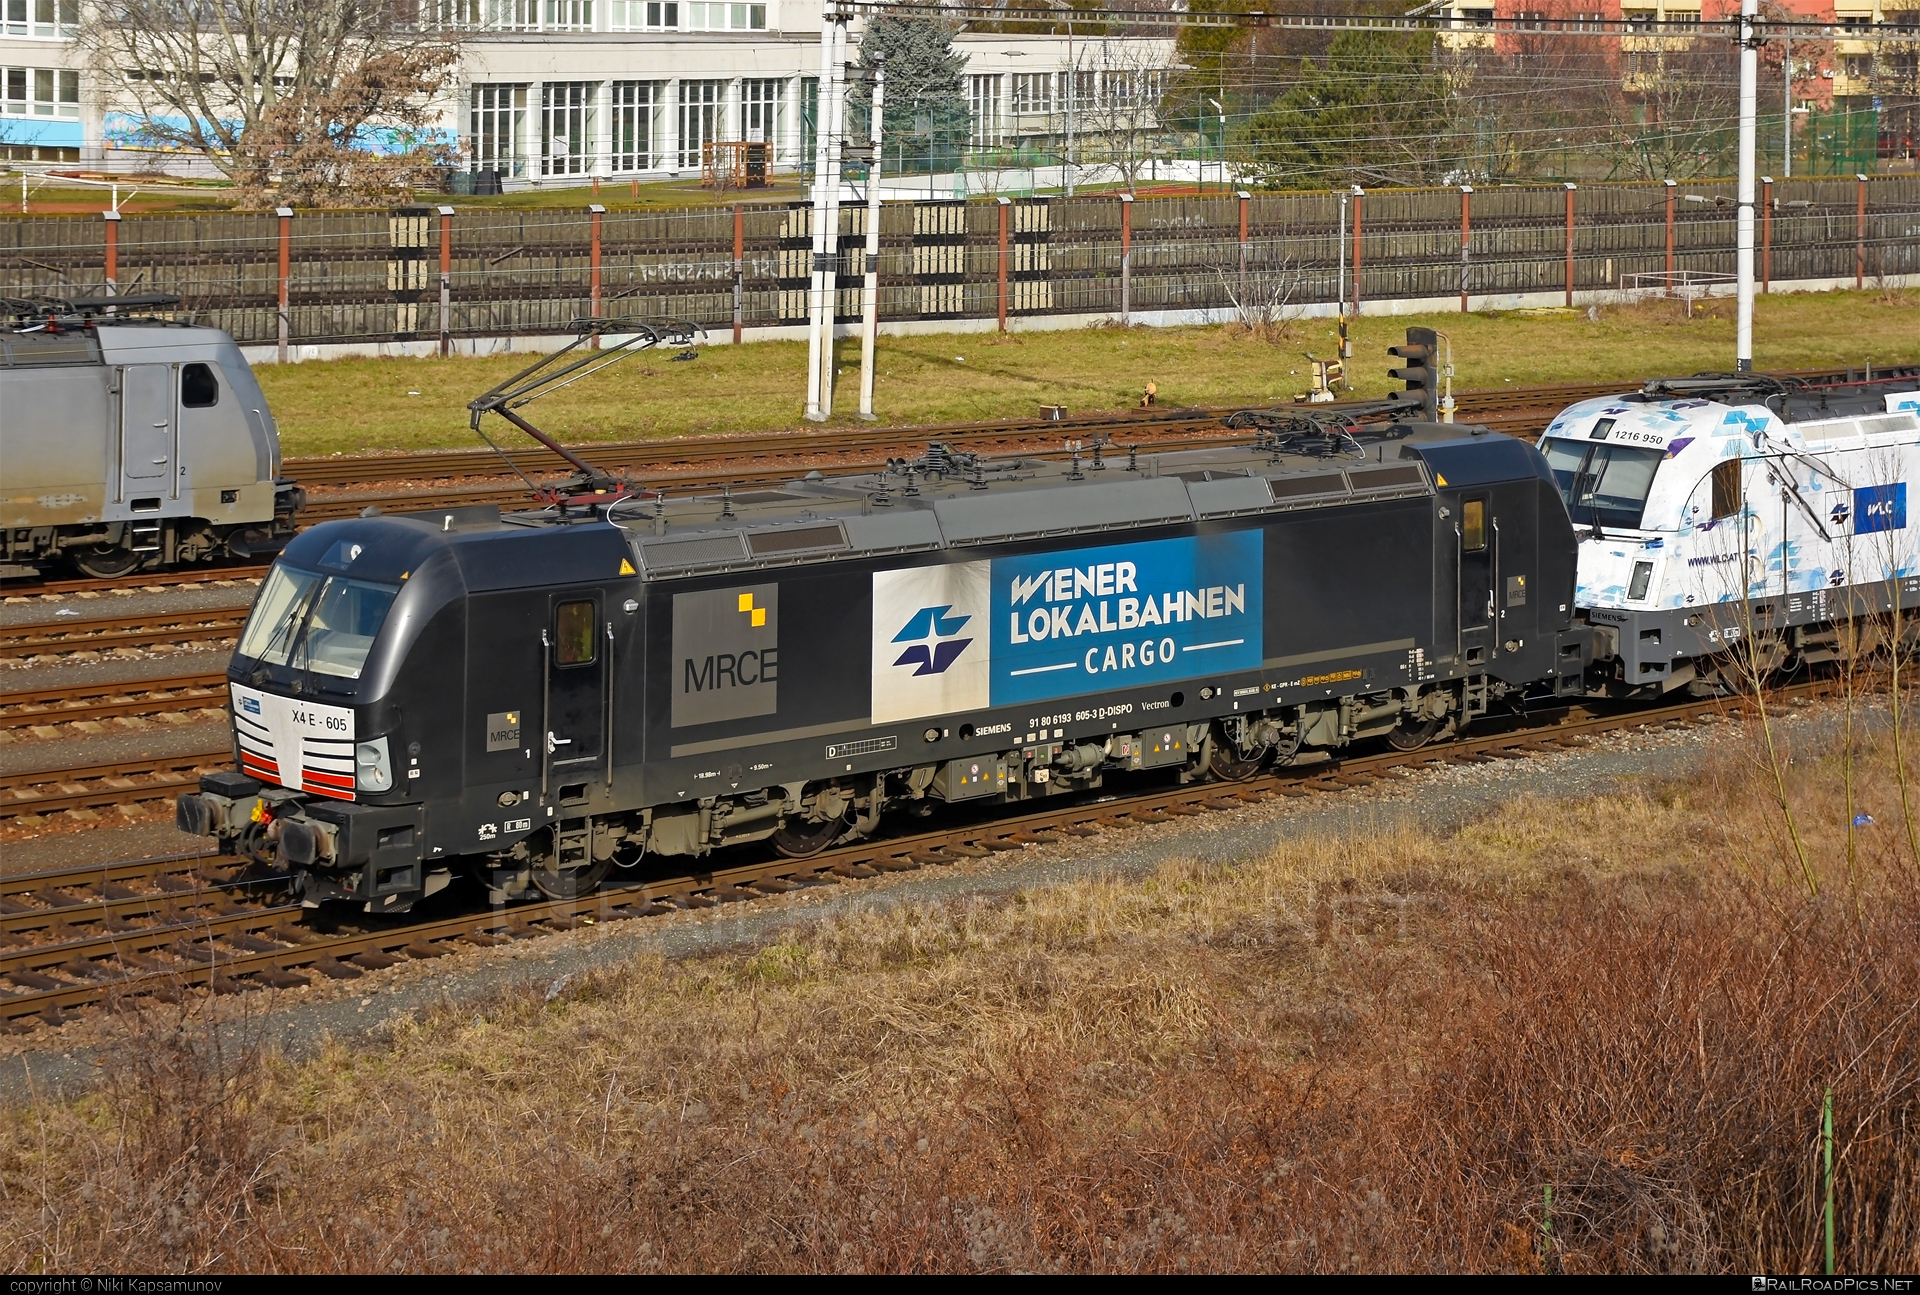 Siemens Vectron AC - 193 605 operated by Wiener Lokalbahnen Cargo GmbH #dispolok #mitsuirailcapitaleurope #mitsuirailcapitaleuropegmbh #mrce #siemens #siemensVectron #siemensVectronAC #vectron #vectronAC #wienerlokalbahnencargo #wienerlokalbahnencargogmbh #wlc